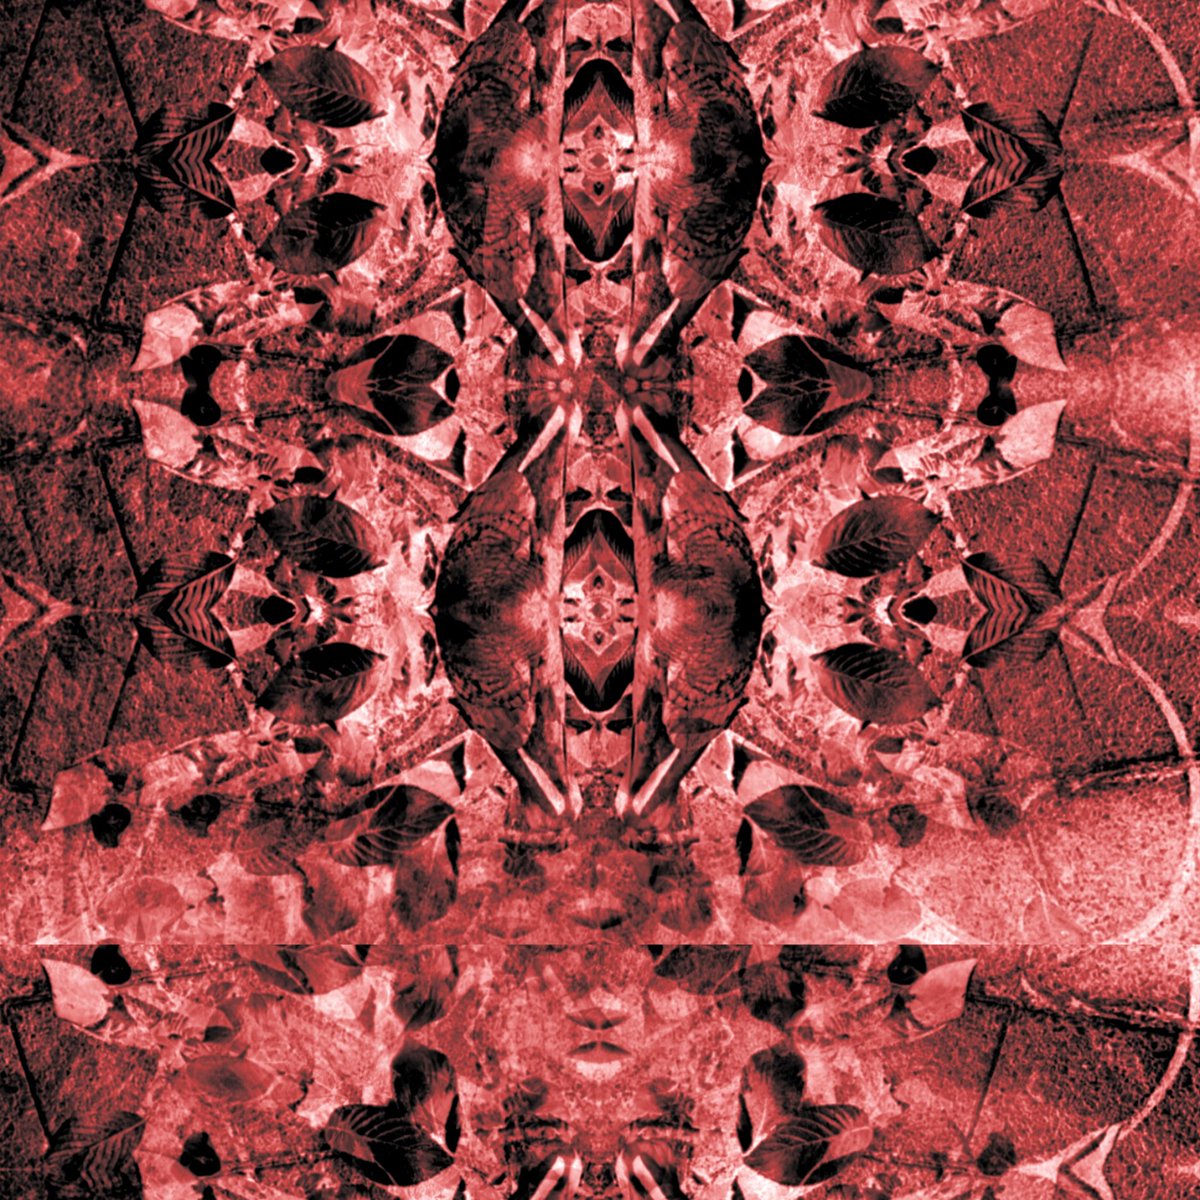 『Beats of Blood Vessel』
created by egg @egg_210

My other project.↓
NonNonΔddiction.
@CocainePix

#visualart #artwork #glitch #NFTs #NFTCommunity #cryptoartist #Abstract #digitalart #デジタルアート #デジタル絵画 #NFTartist #abstractart #芸術同盟 #創作の狼煙 #芸術の輪 #trance